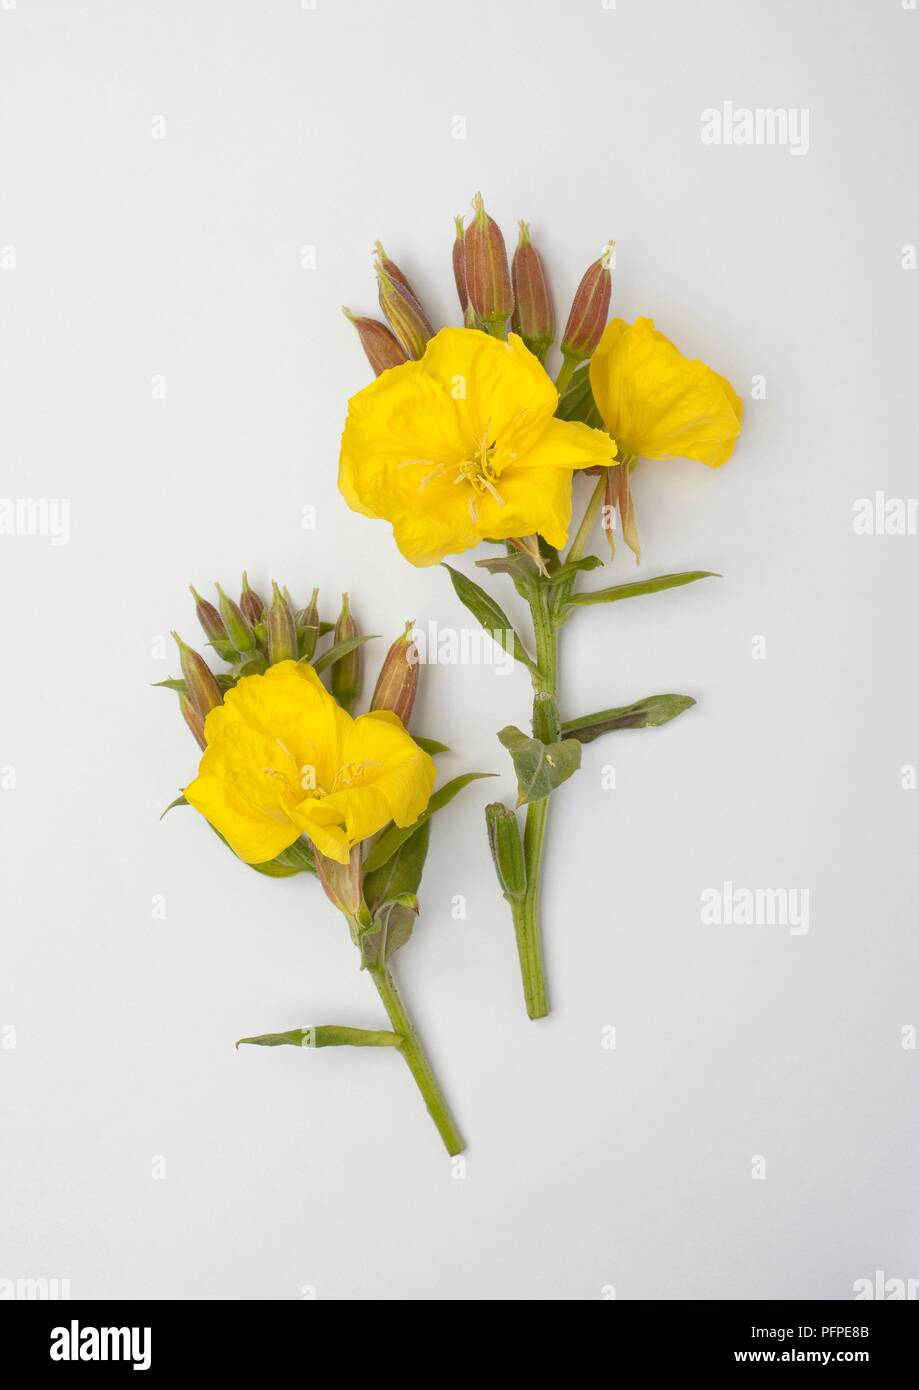 Yellow flowers of Oenothera glazioviana (Large-Flowered Evening Primrose) and buds on stems Stock Photo